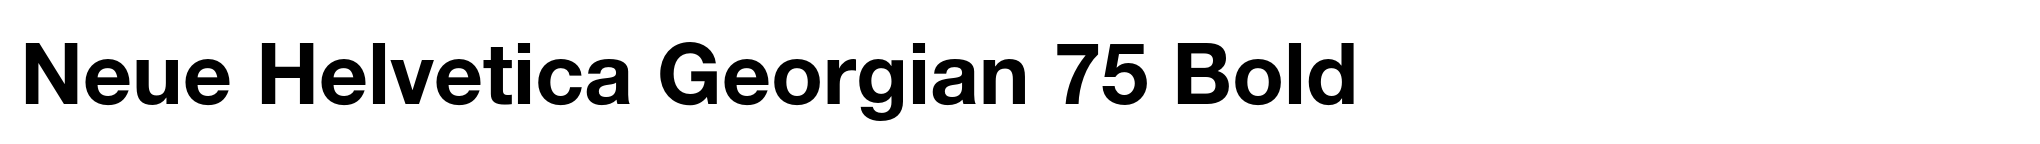 Neue Helvetica Georgian 75 Bold image